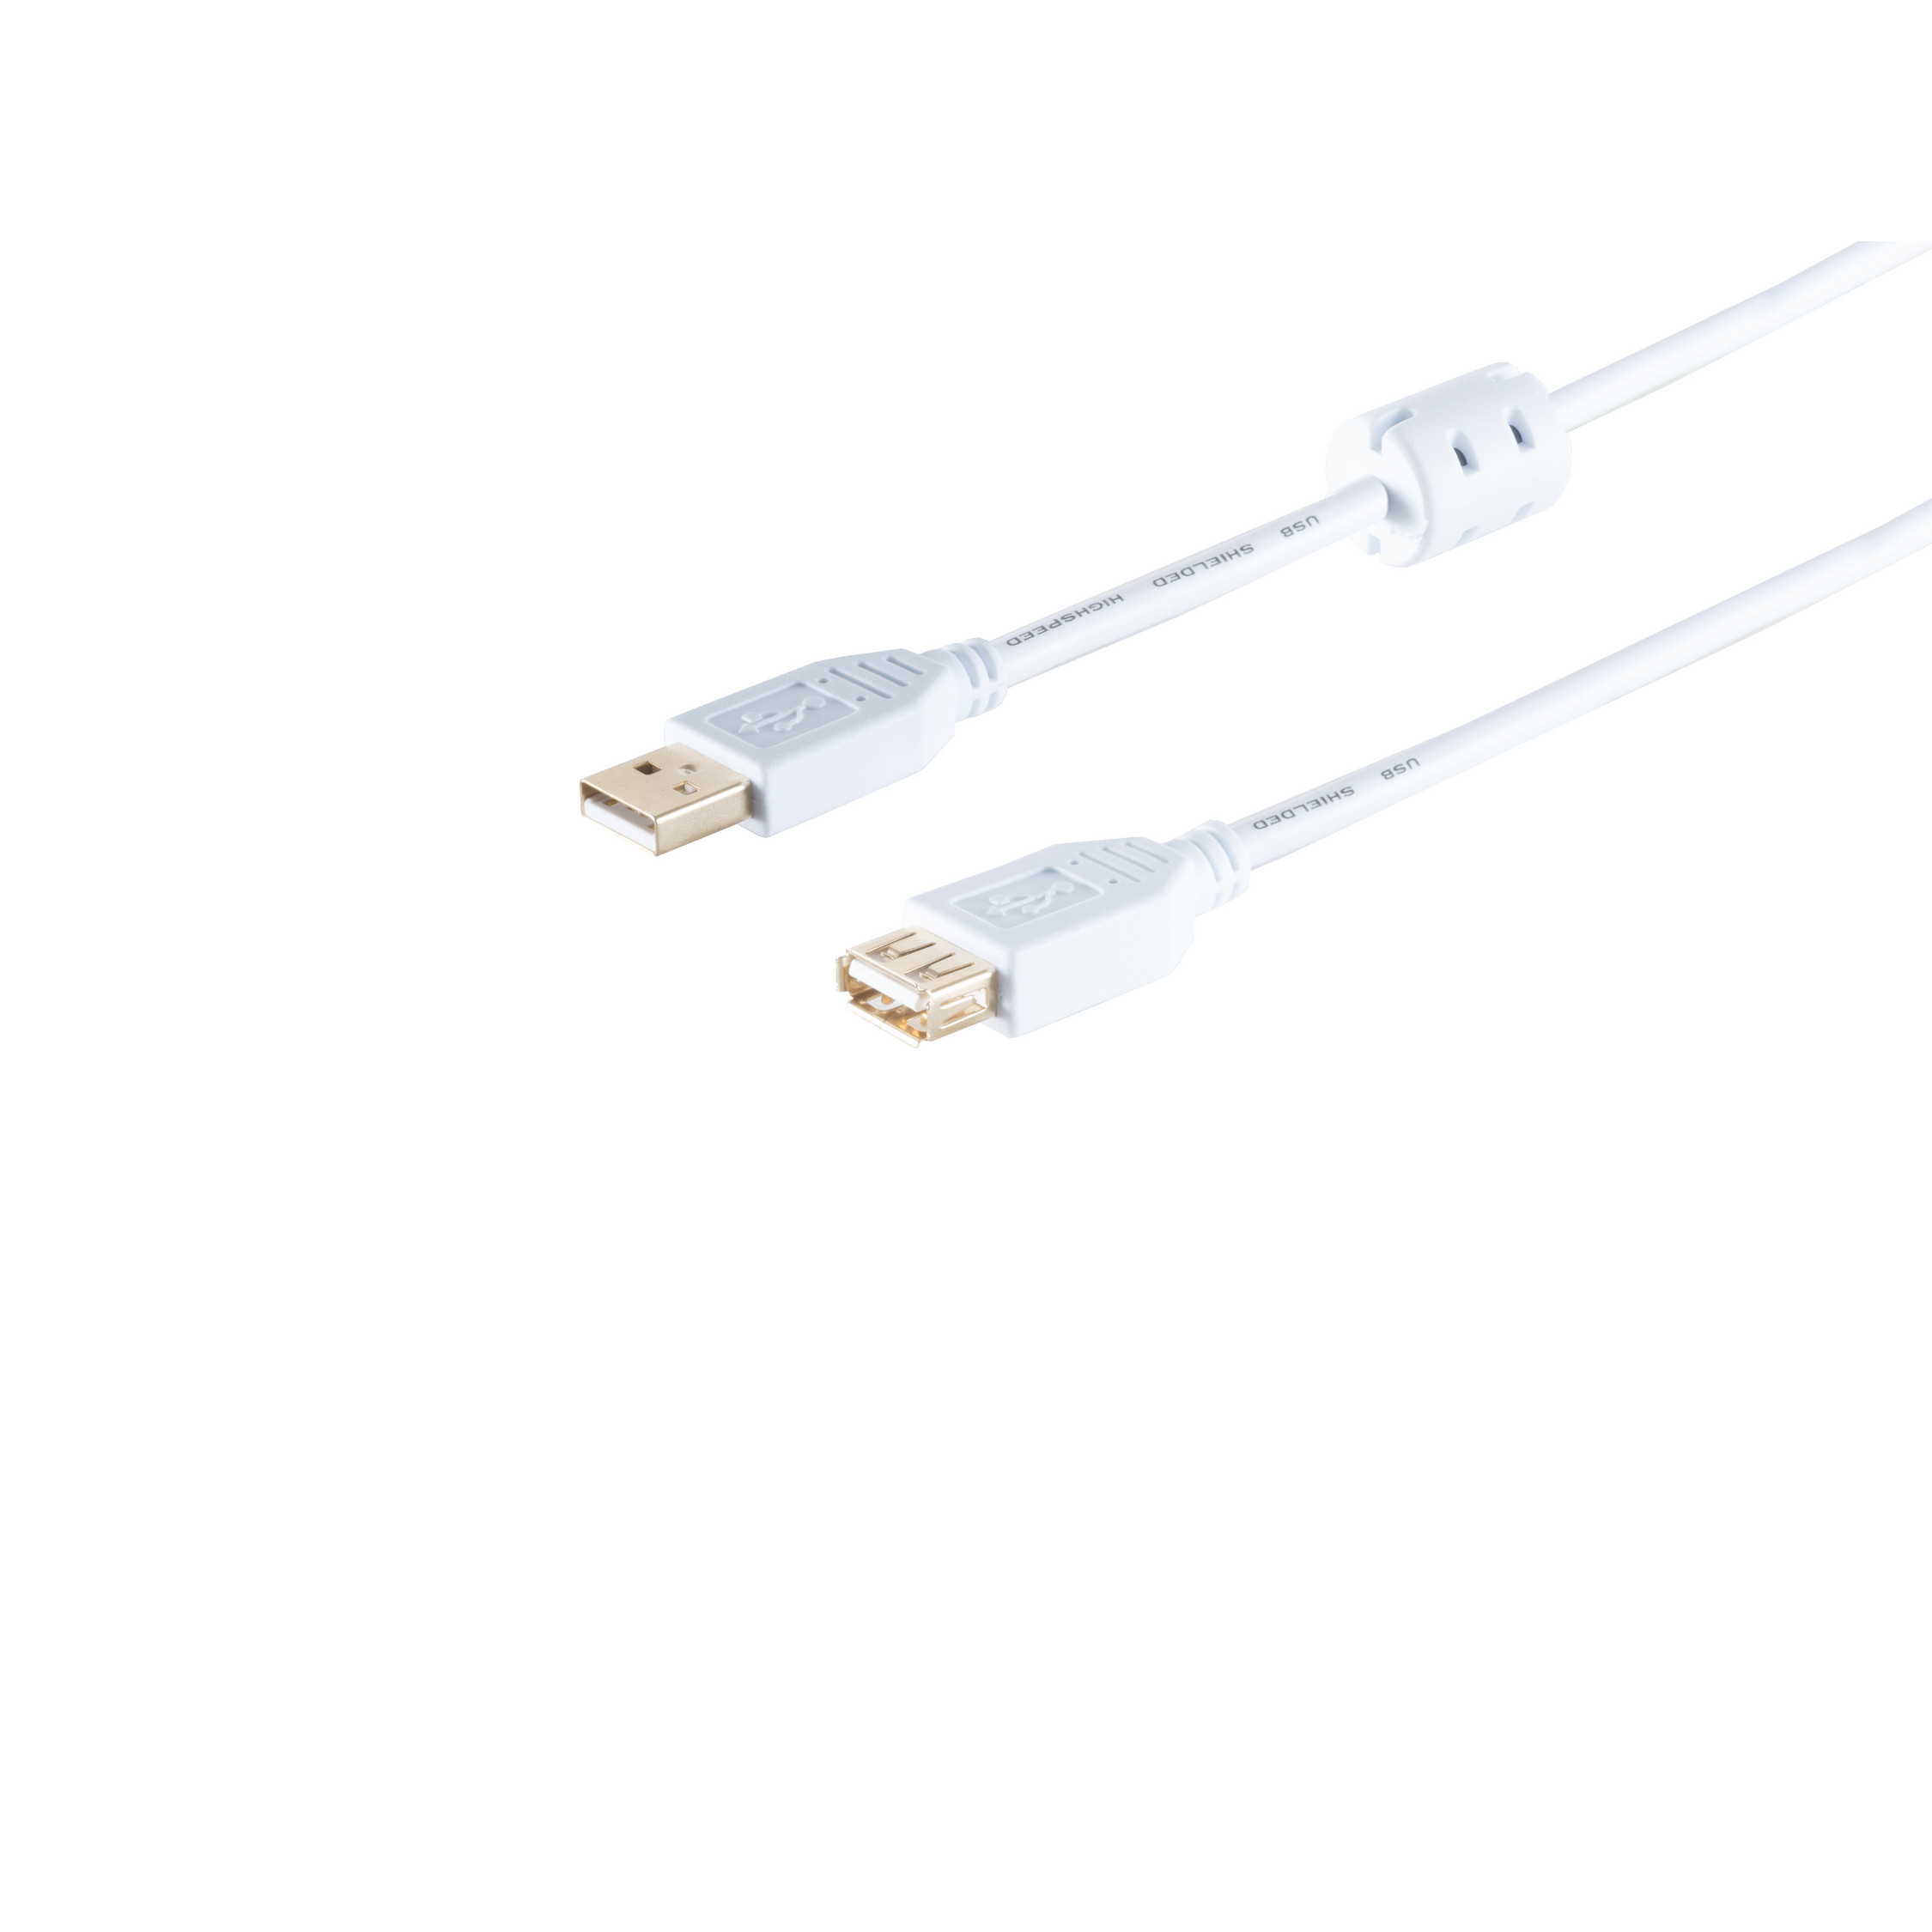 KABELBUDE USB High Speed 2.0 weiß, mit Ferrit, 1,8m Buchse A/A Kabel USB Verlängerung